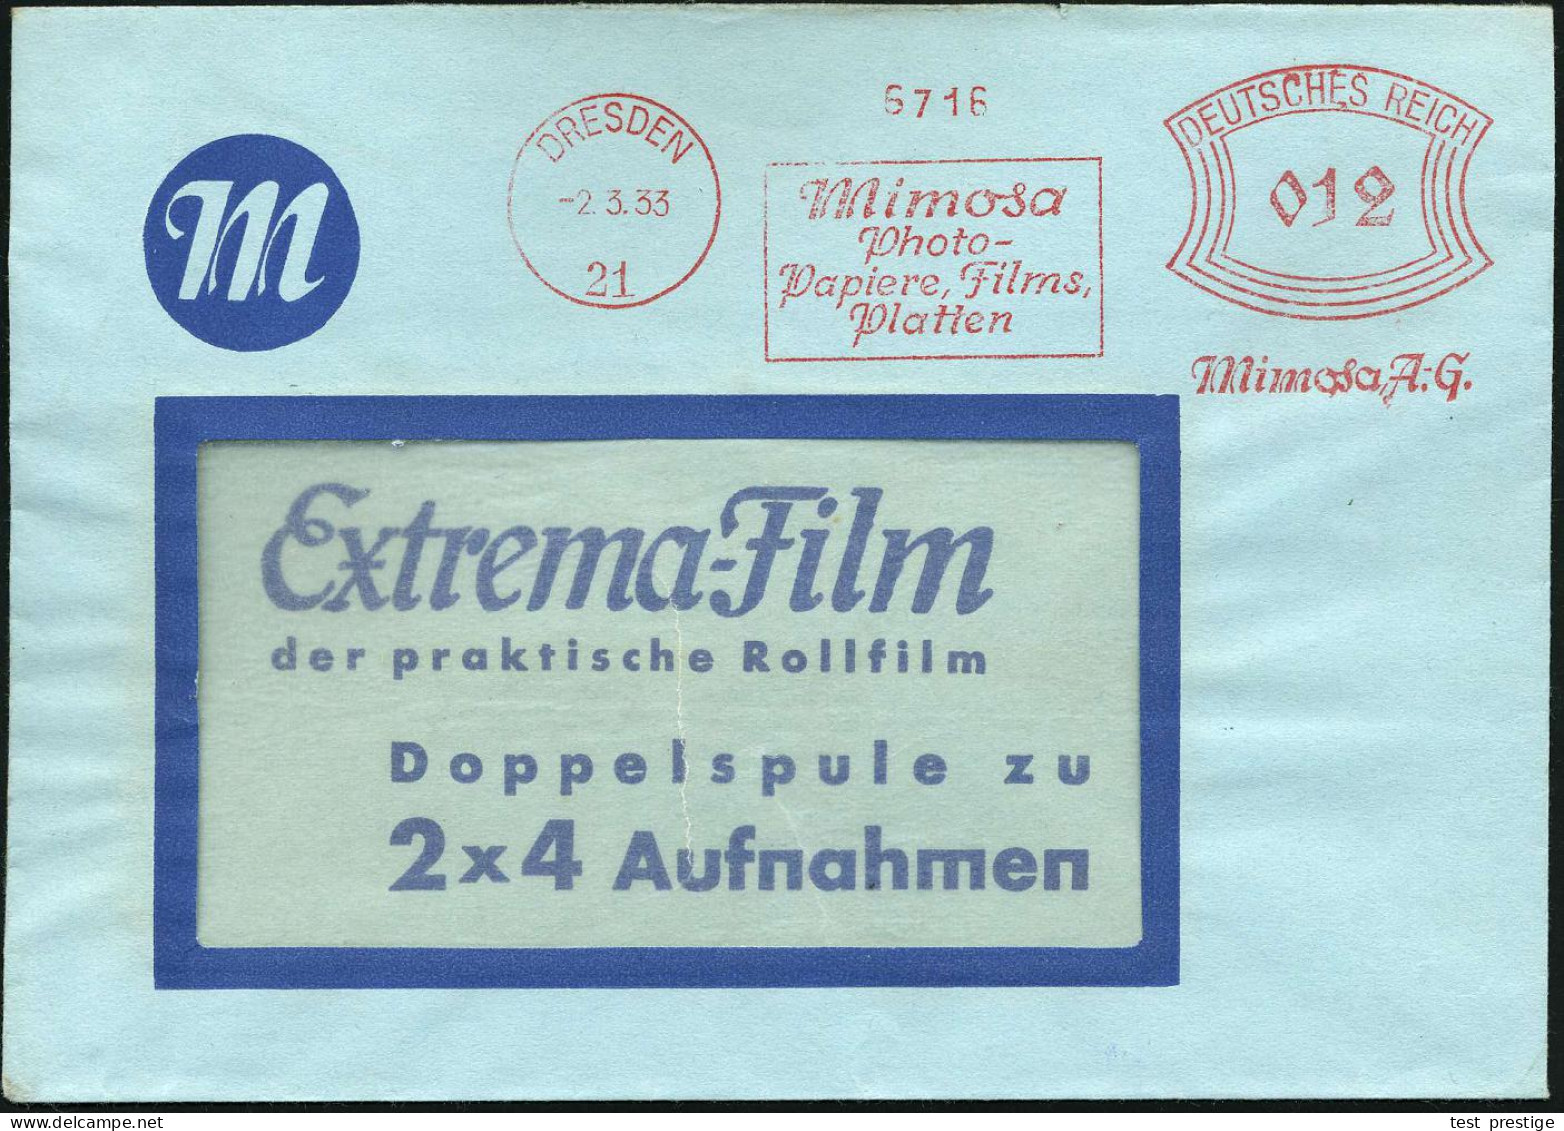 DRESDEN A21/ Mimosa/ Photo-/ Papiere,Films/ Platten.. 1933 (2.3.) AFS Francotyp Auf Dekorativem Reklame-Bf: Extrema-Film - Fotografie